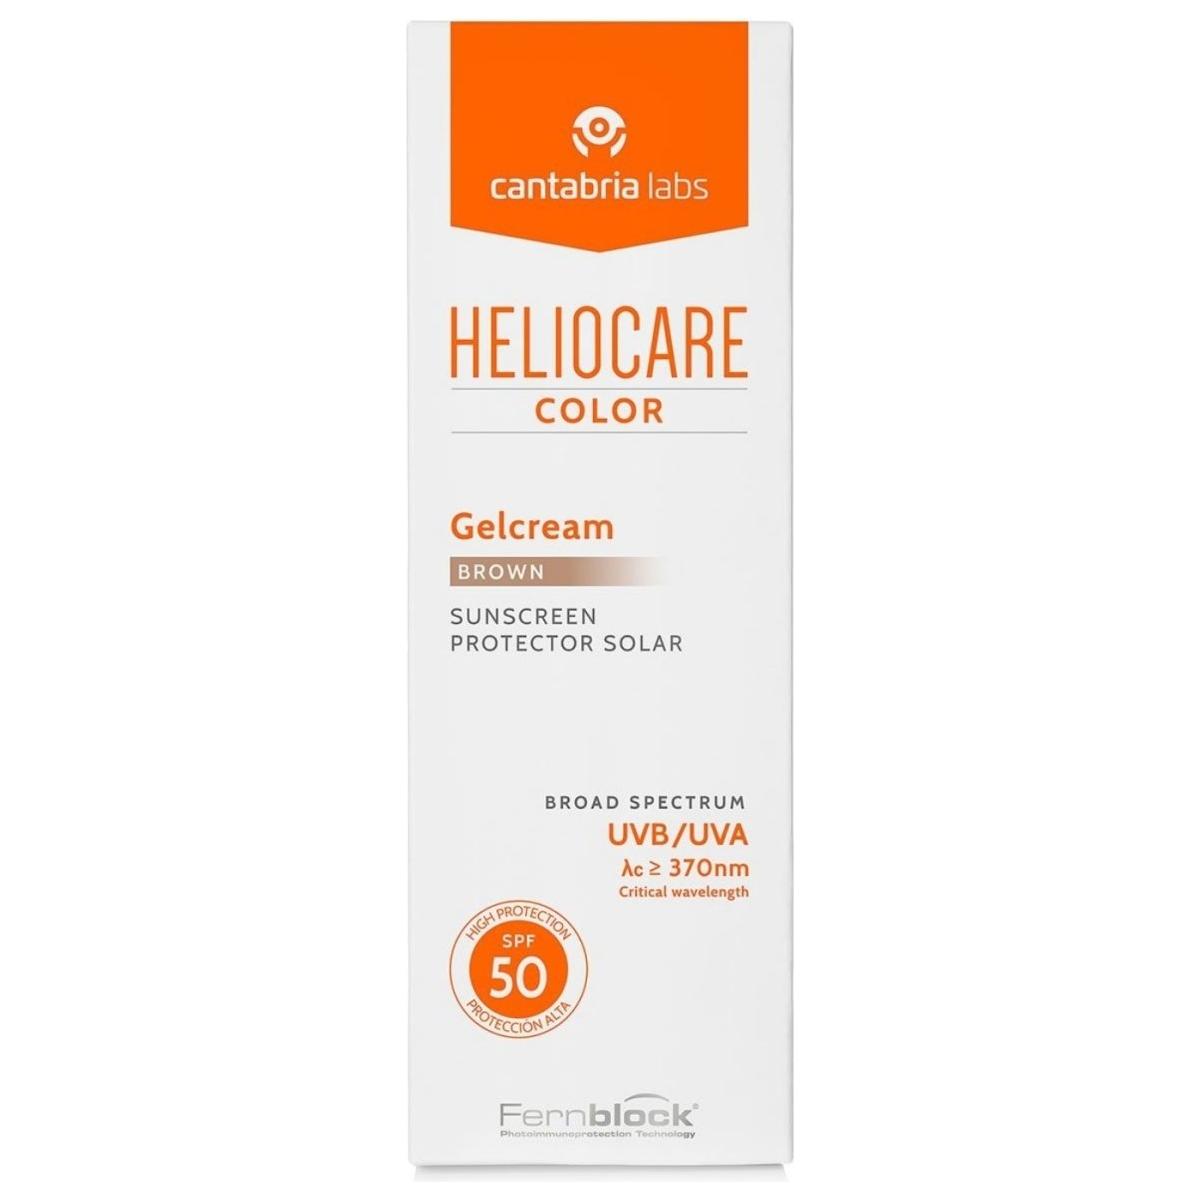 Heliocare | Color Gelcream Brown SPF50 - DG International Ventures Limited